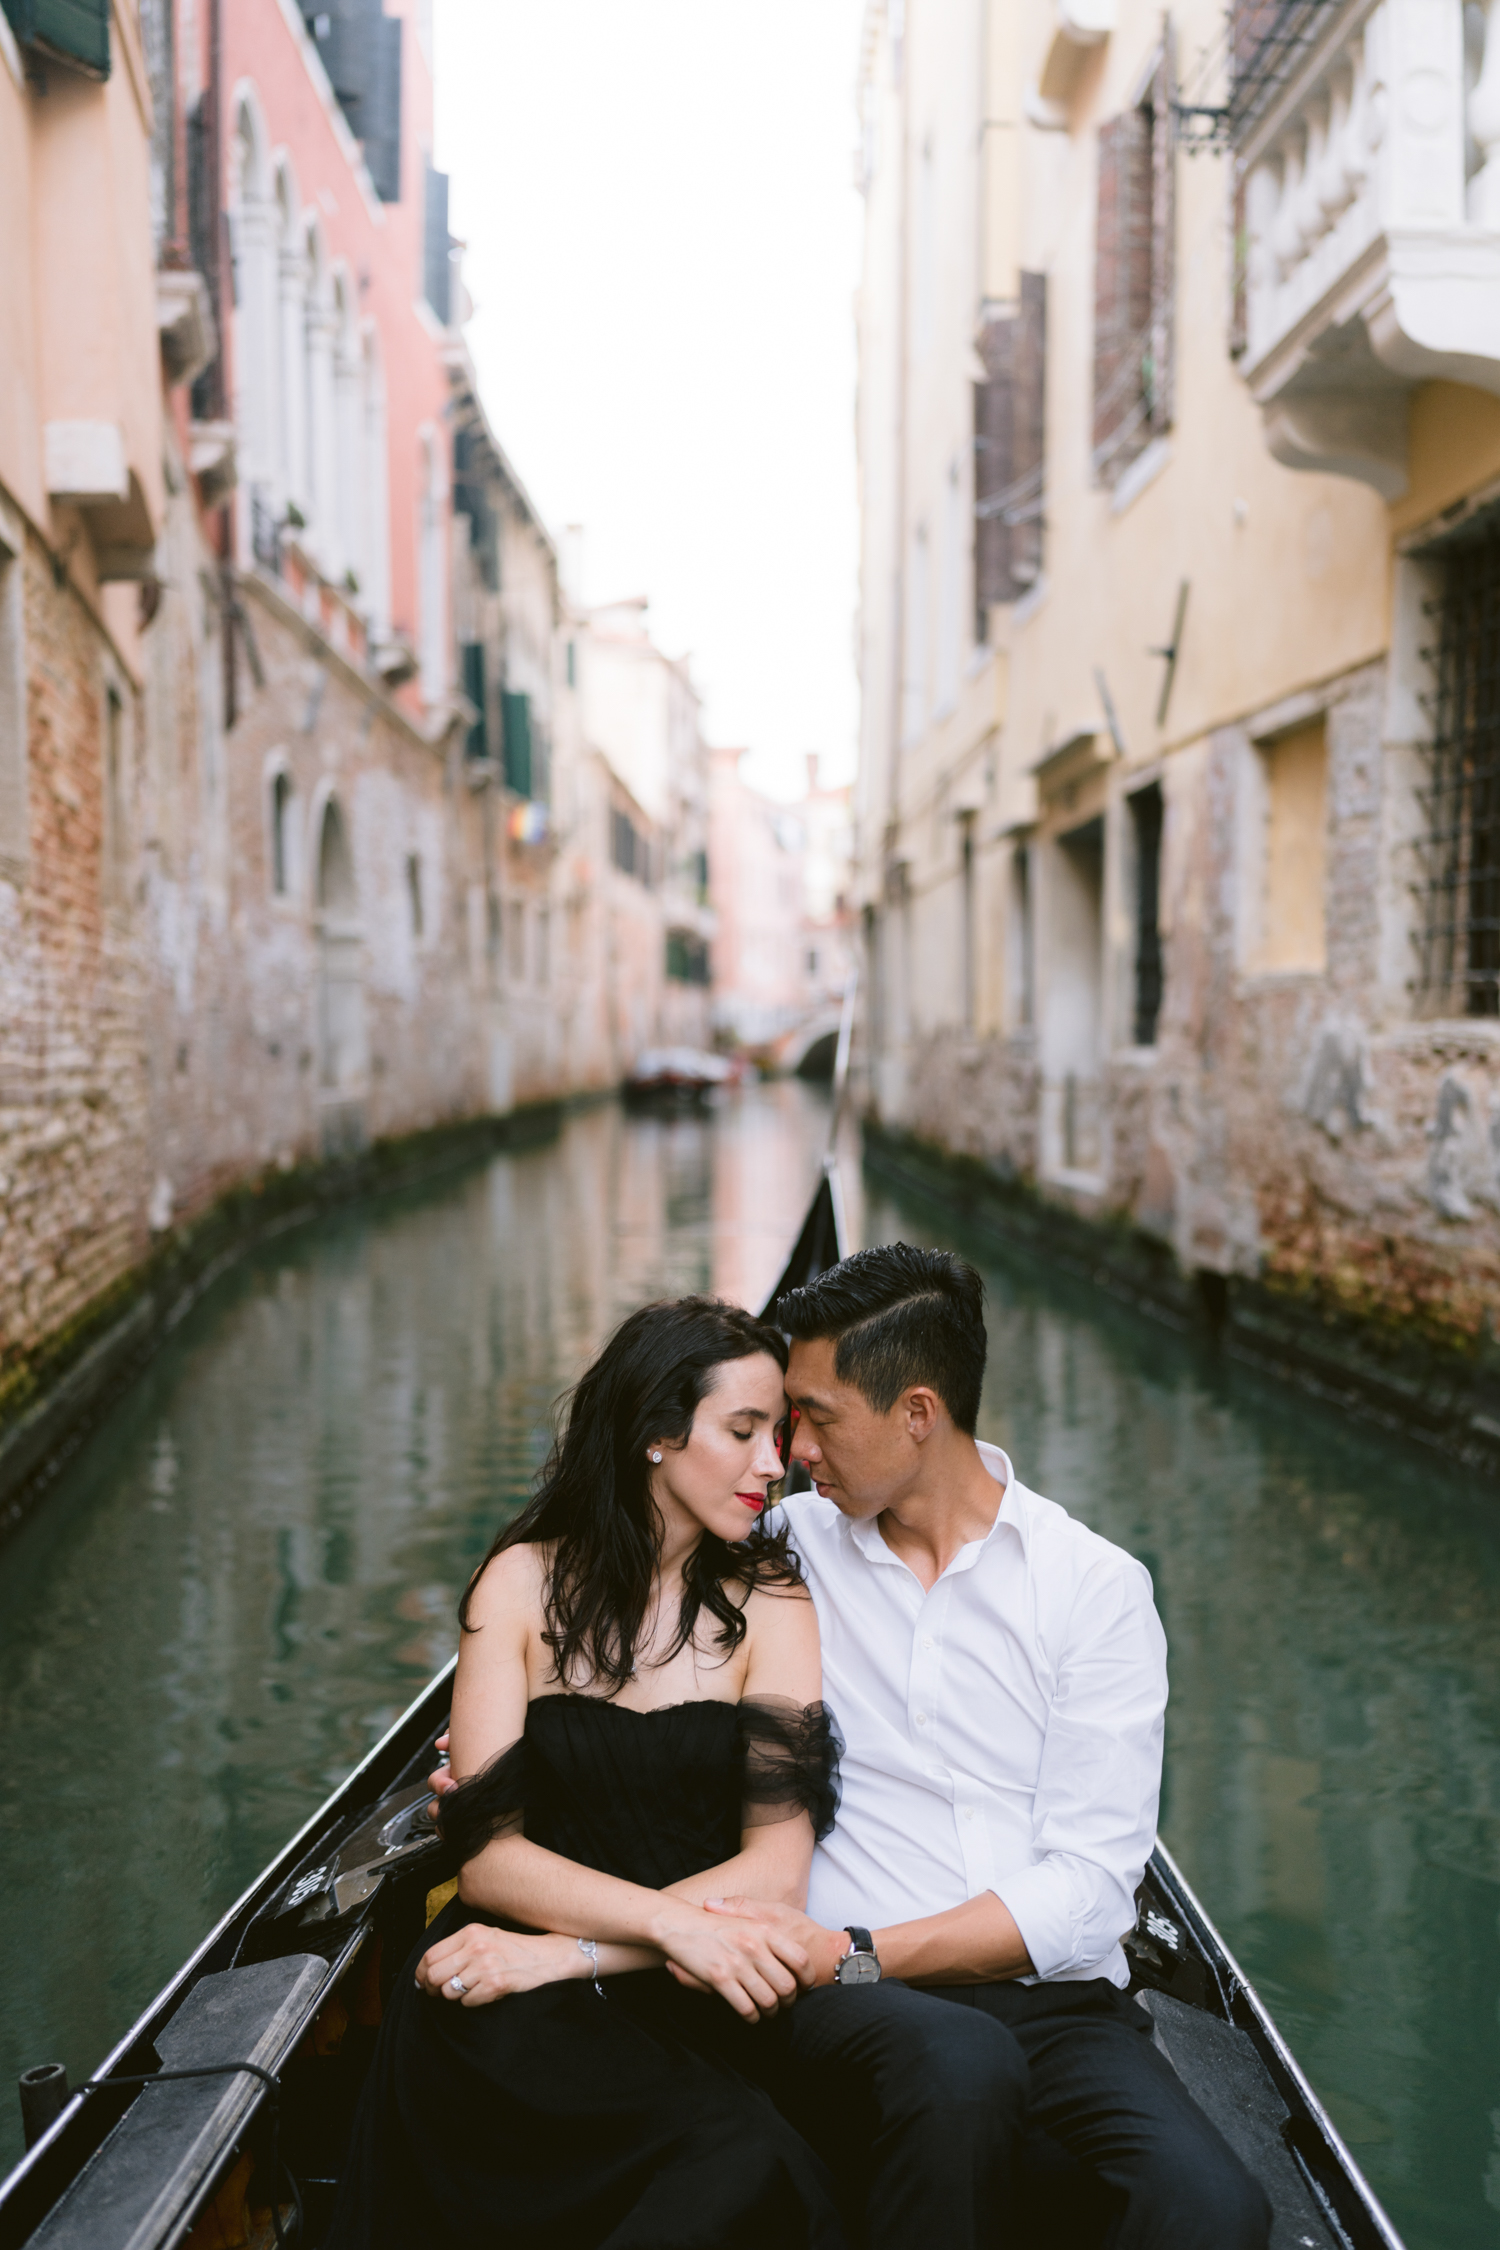 Honeymoon Venice photographer, Alina Indi. Book your photoshoot now